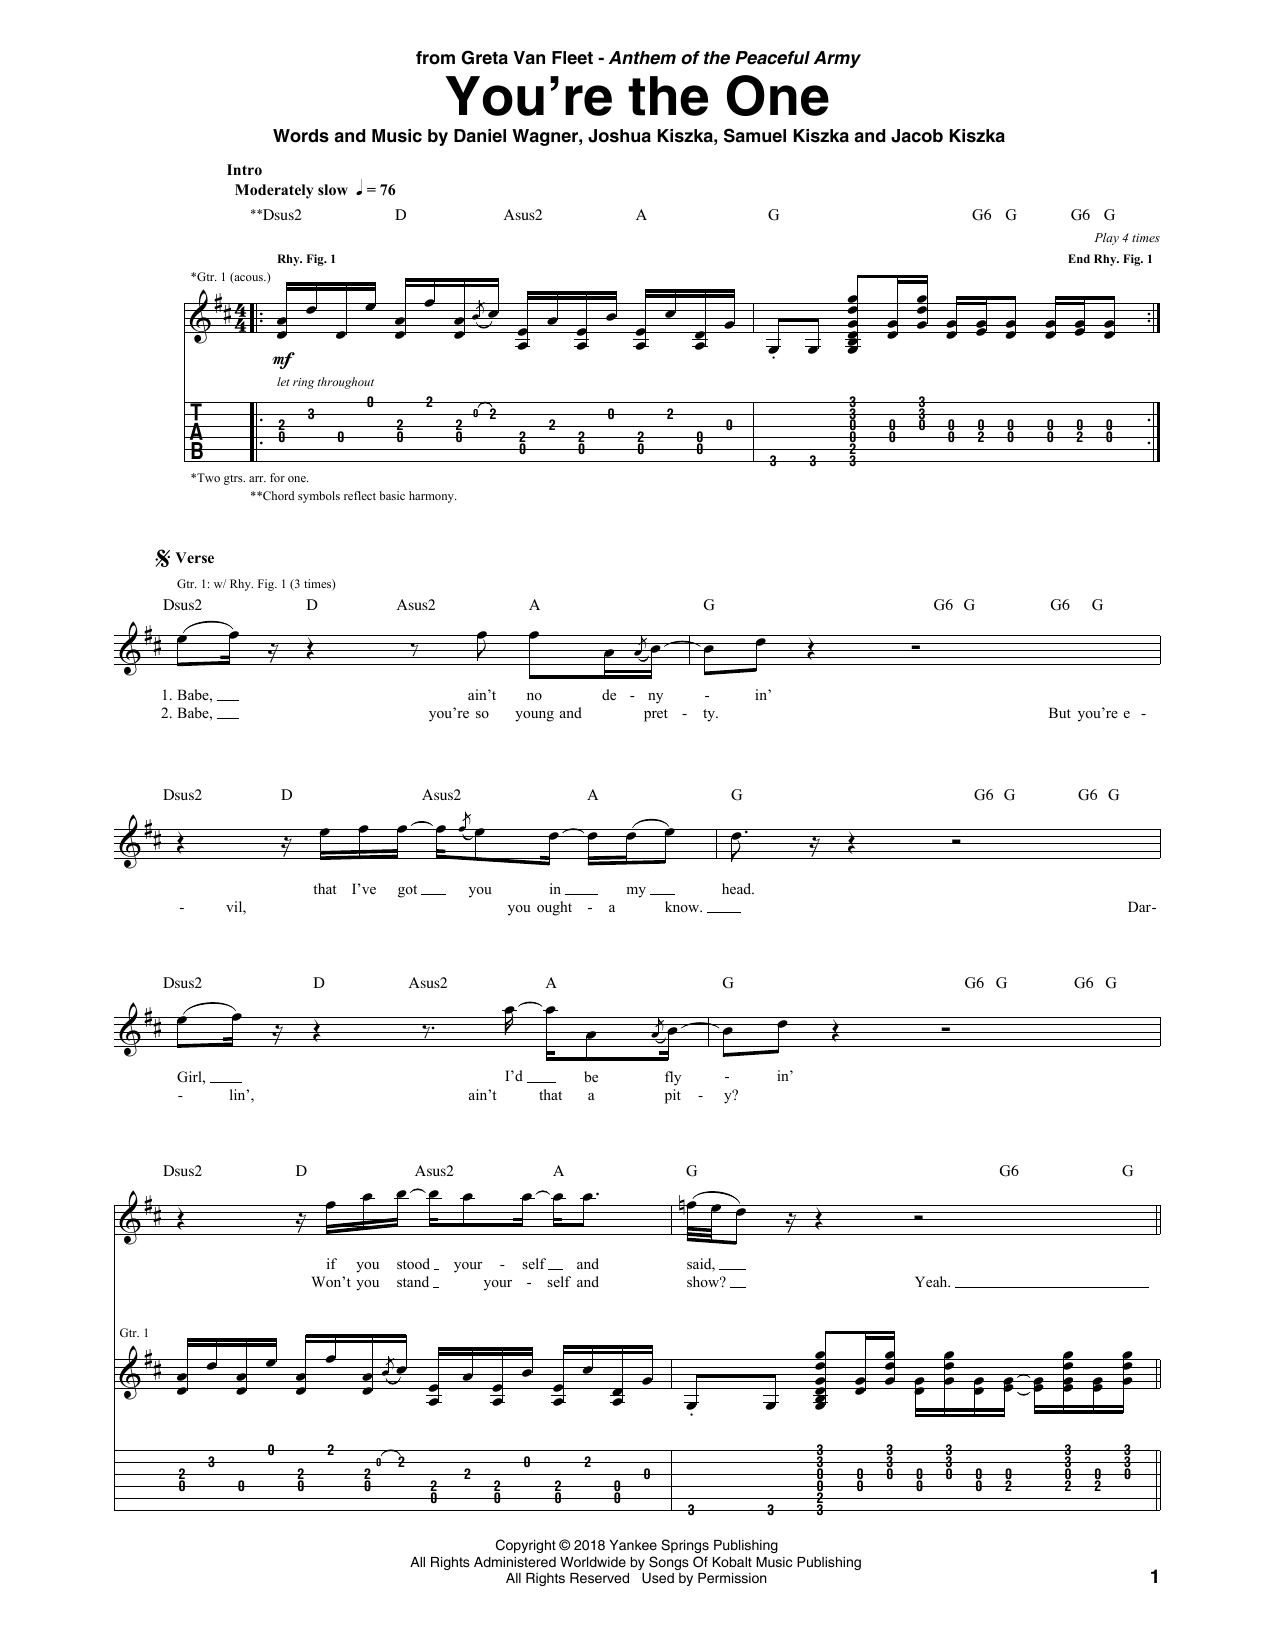 Greta Van Fleet You're The One Sheet Music Notes & Chords for Guitar Tab - Download or Print PDF